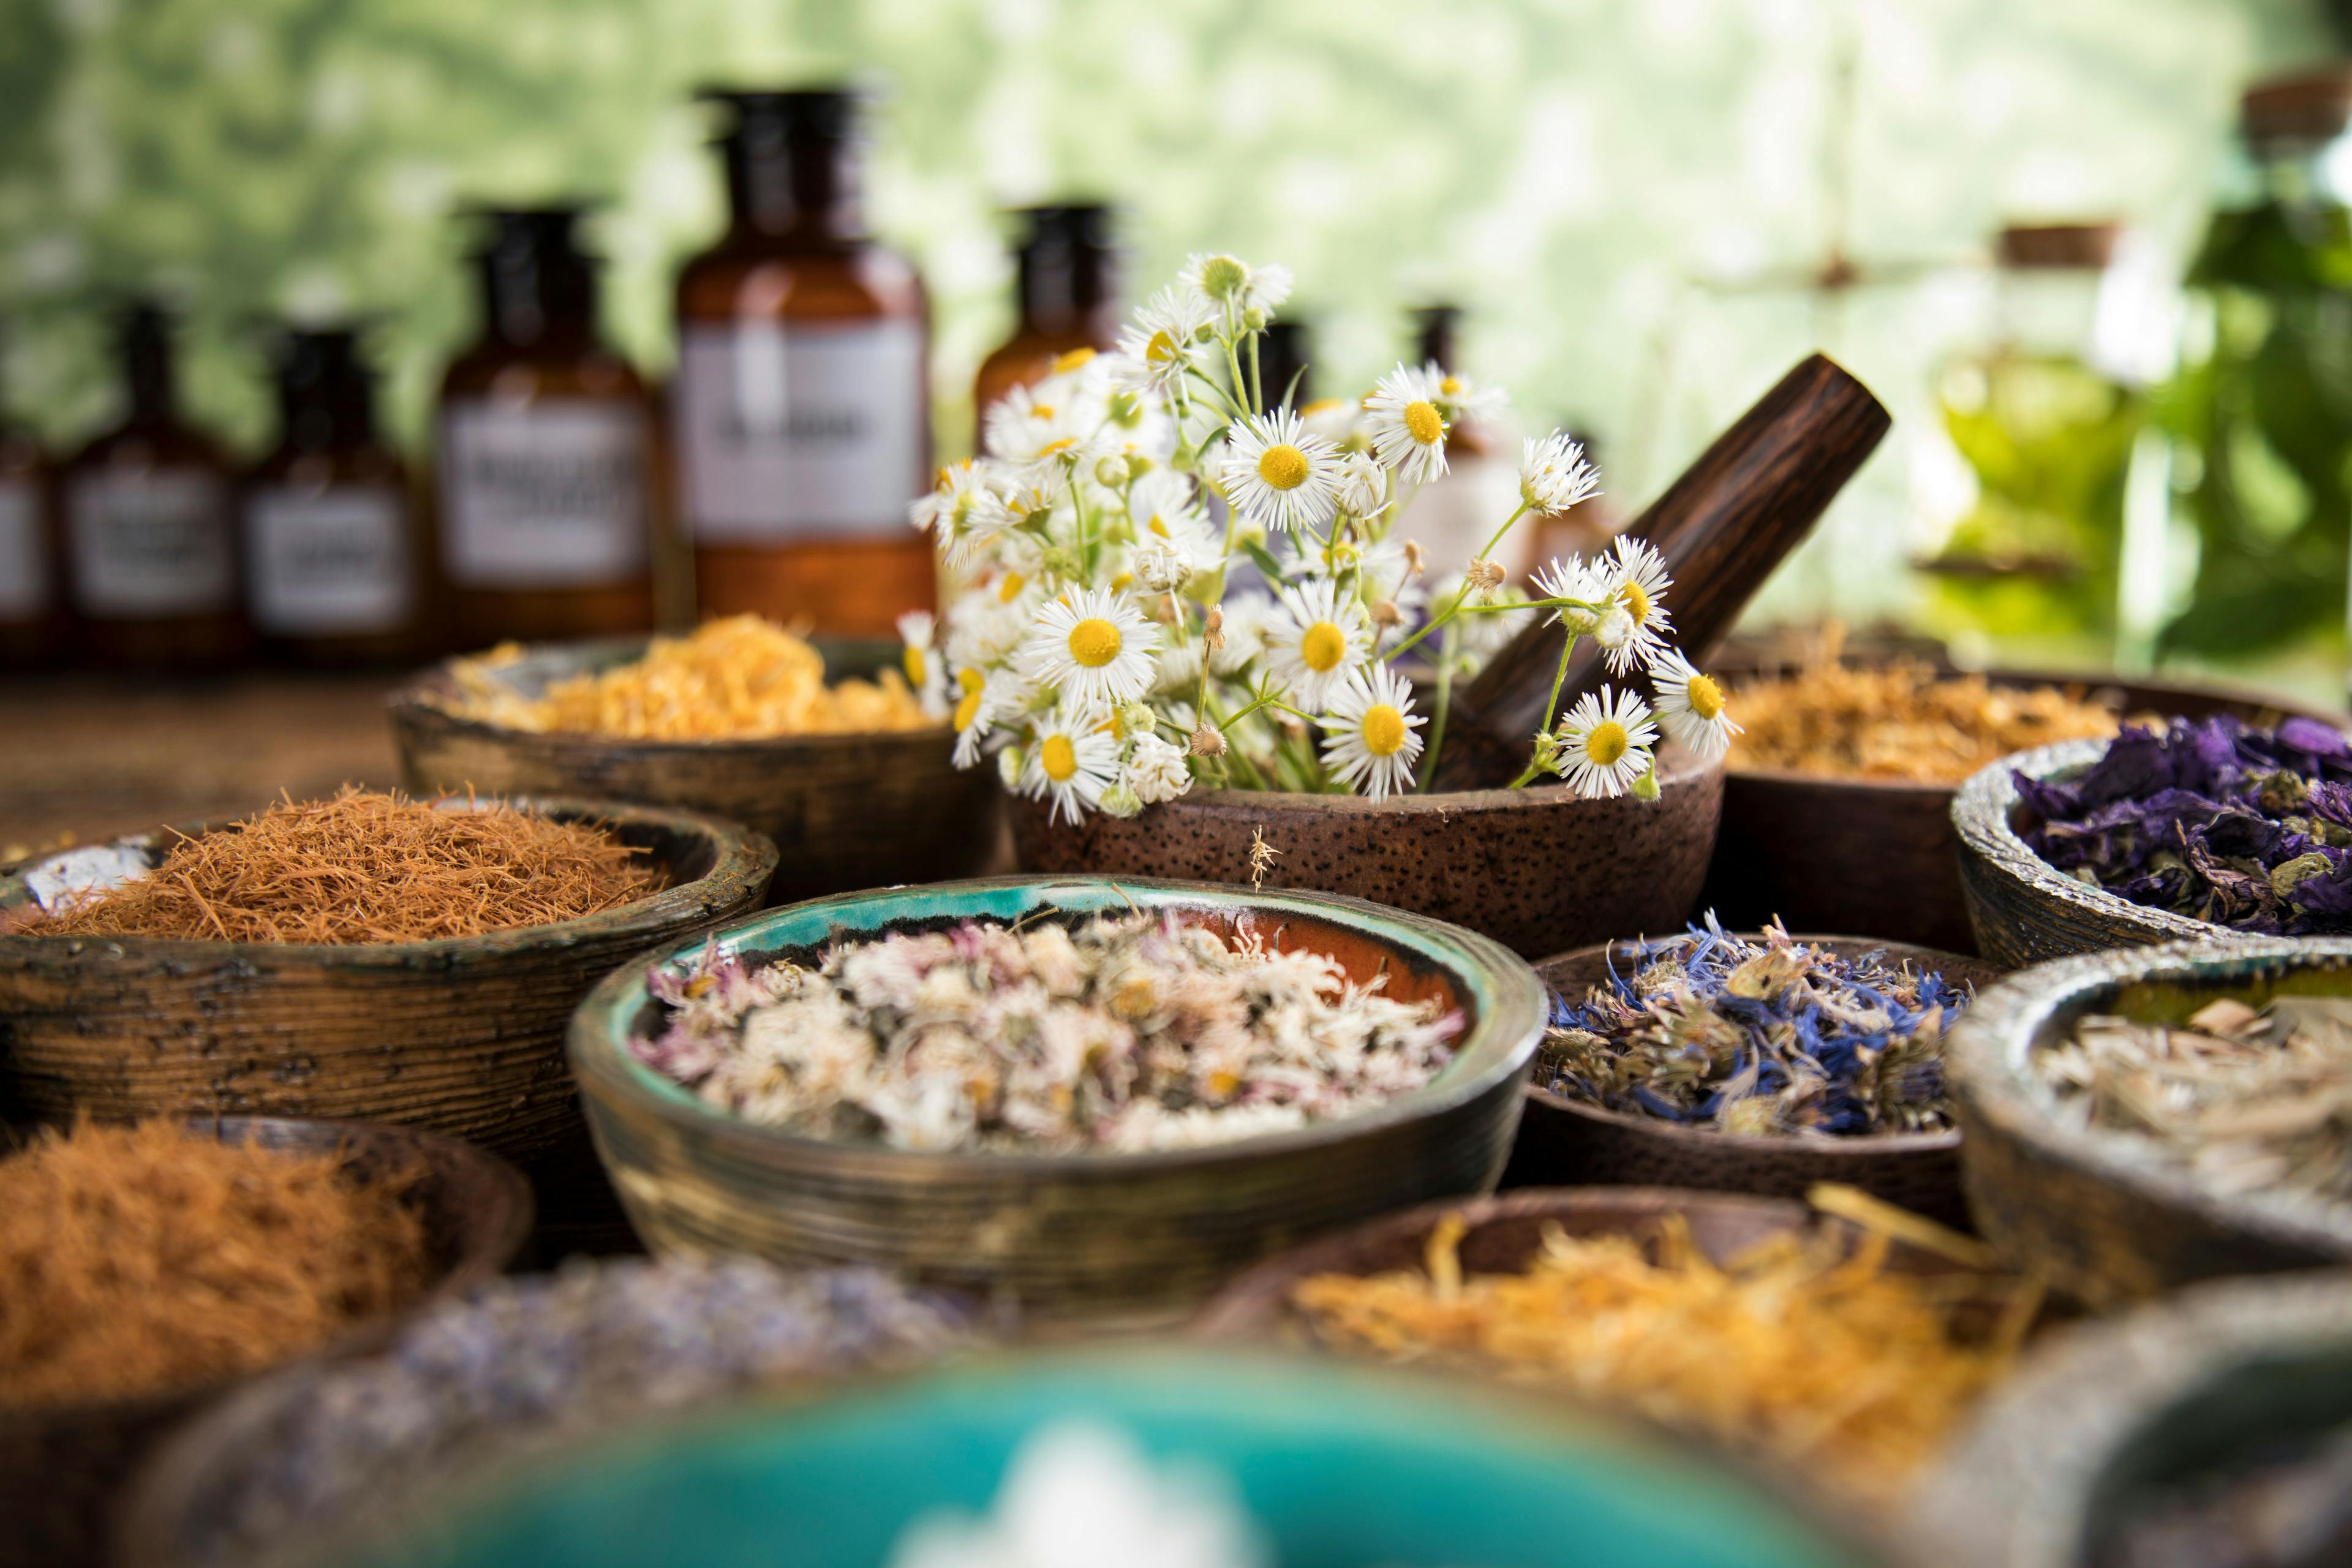 Natural remedy, herbal medicine and wooden table background | Image Credit: © Sebastian Duda - stock.adobe.com